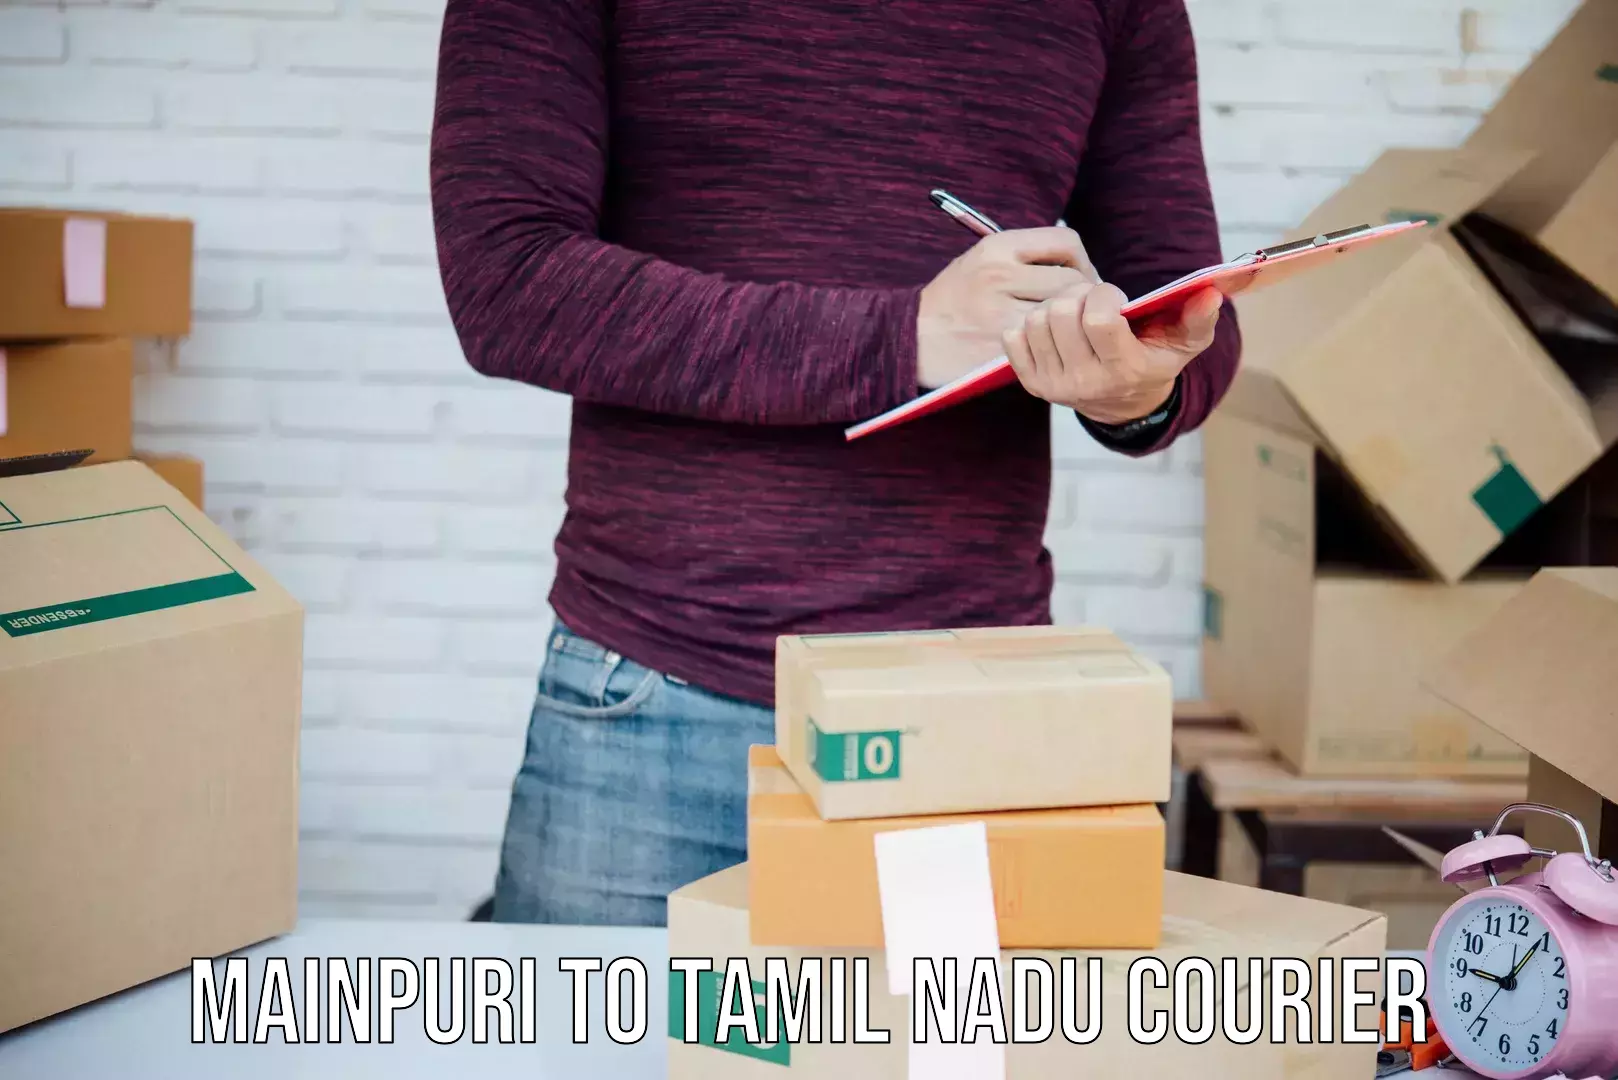 International courier networks Mainpuri to Tamil Nadu